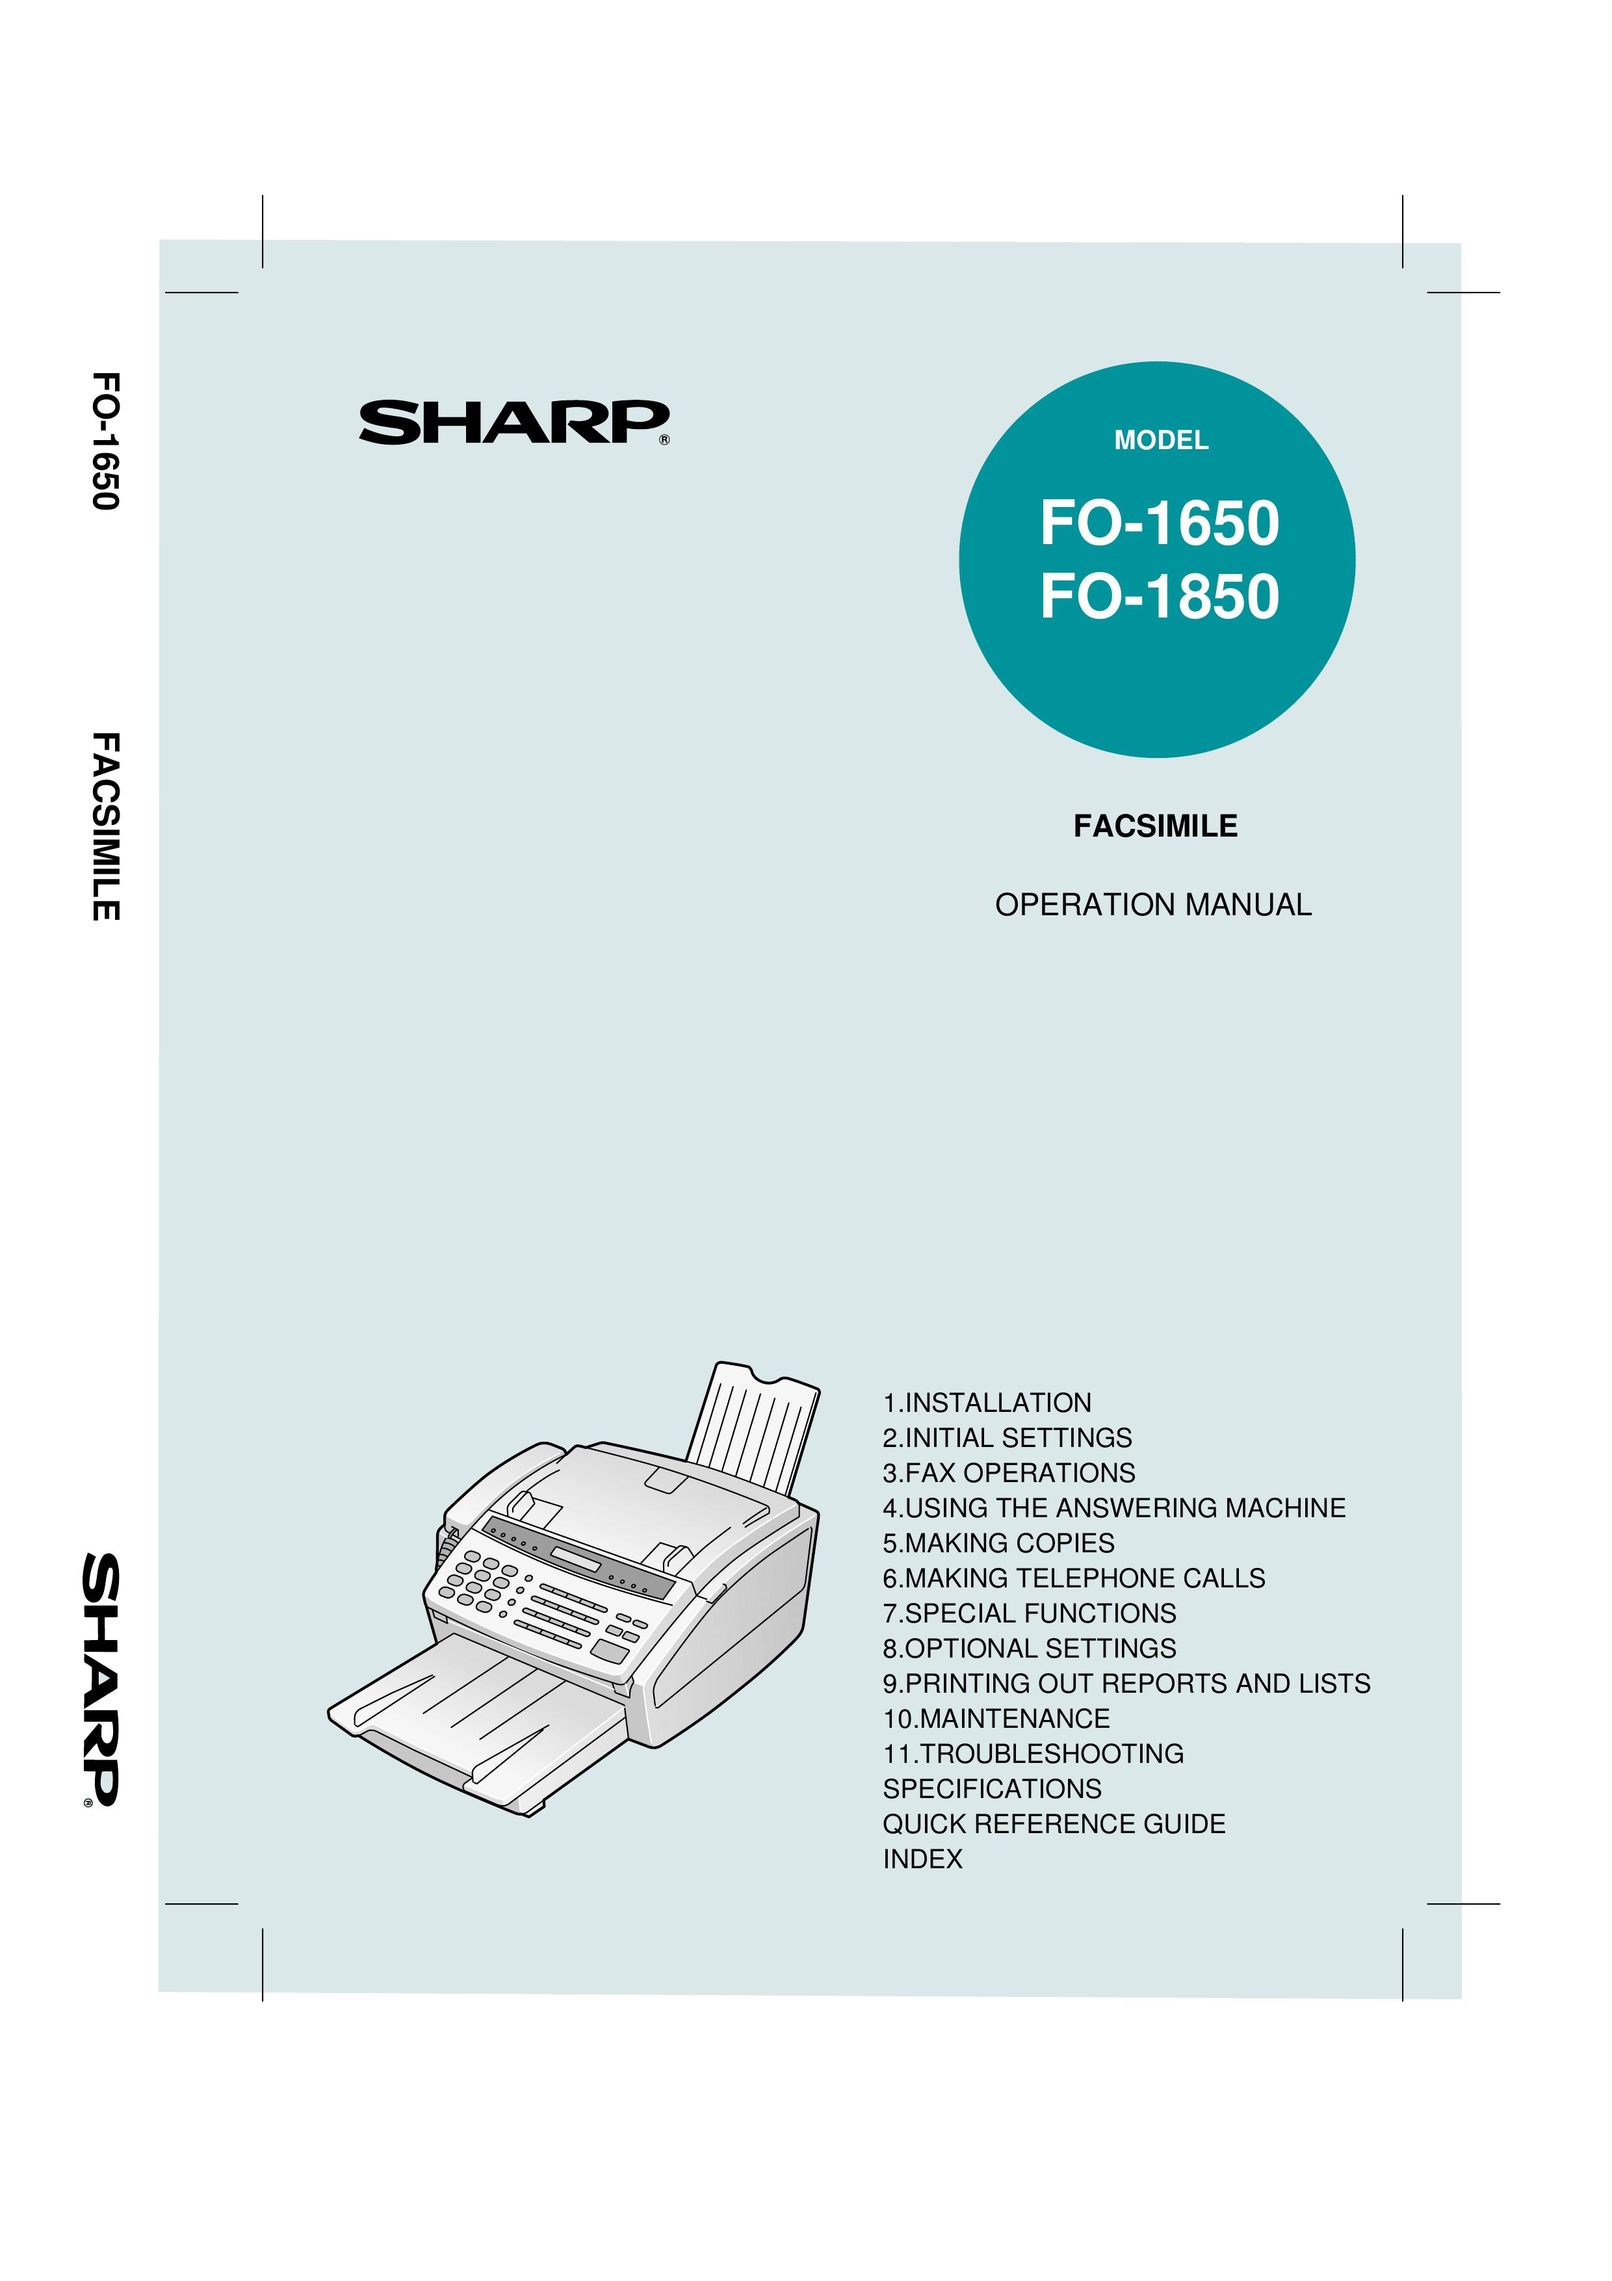 Sharp FO-1850 Fax Machine User Manual